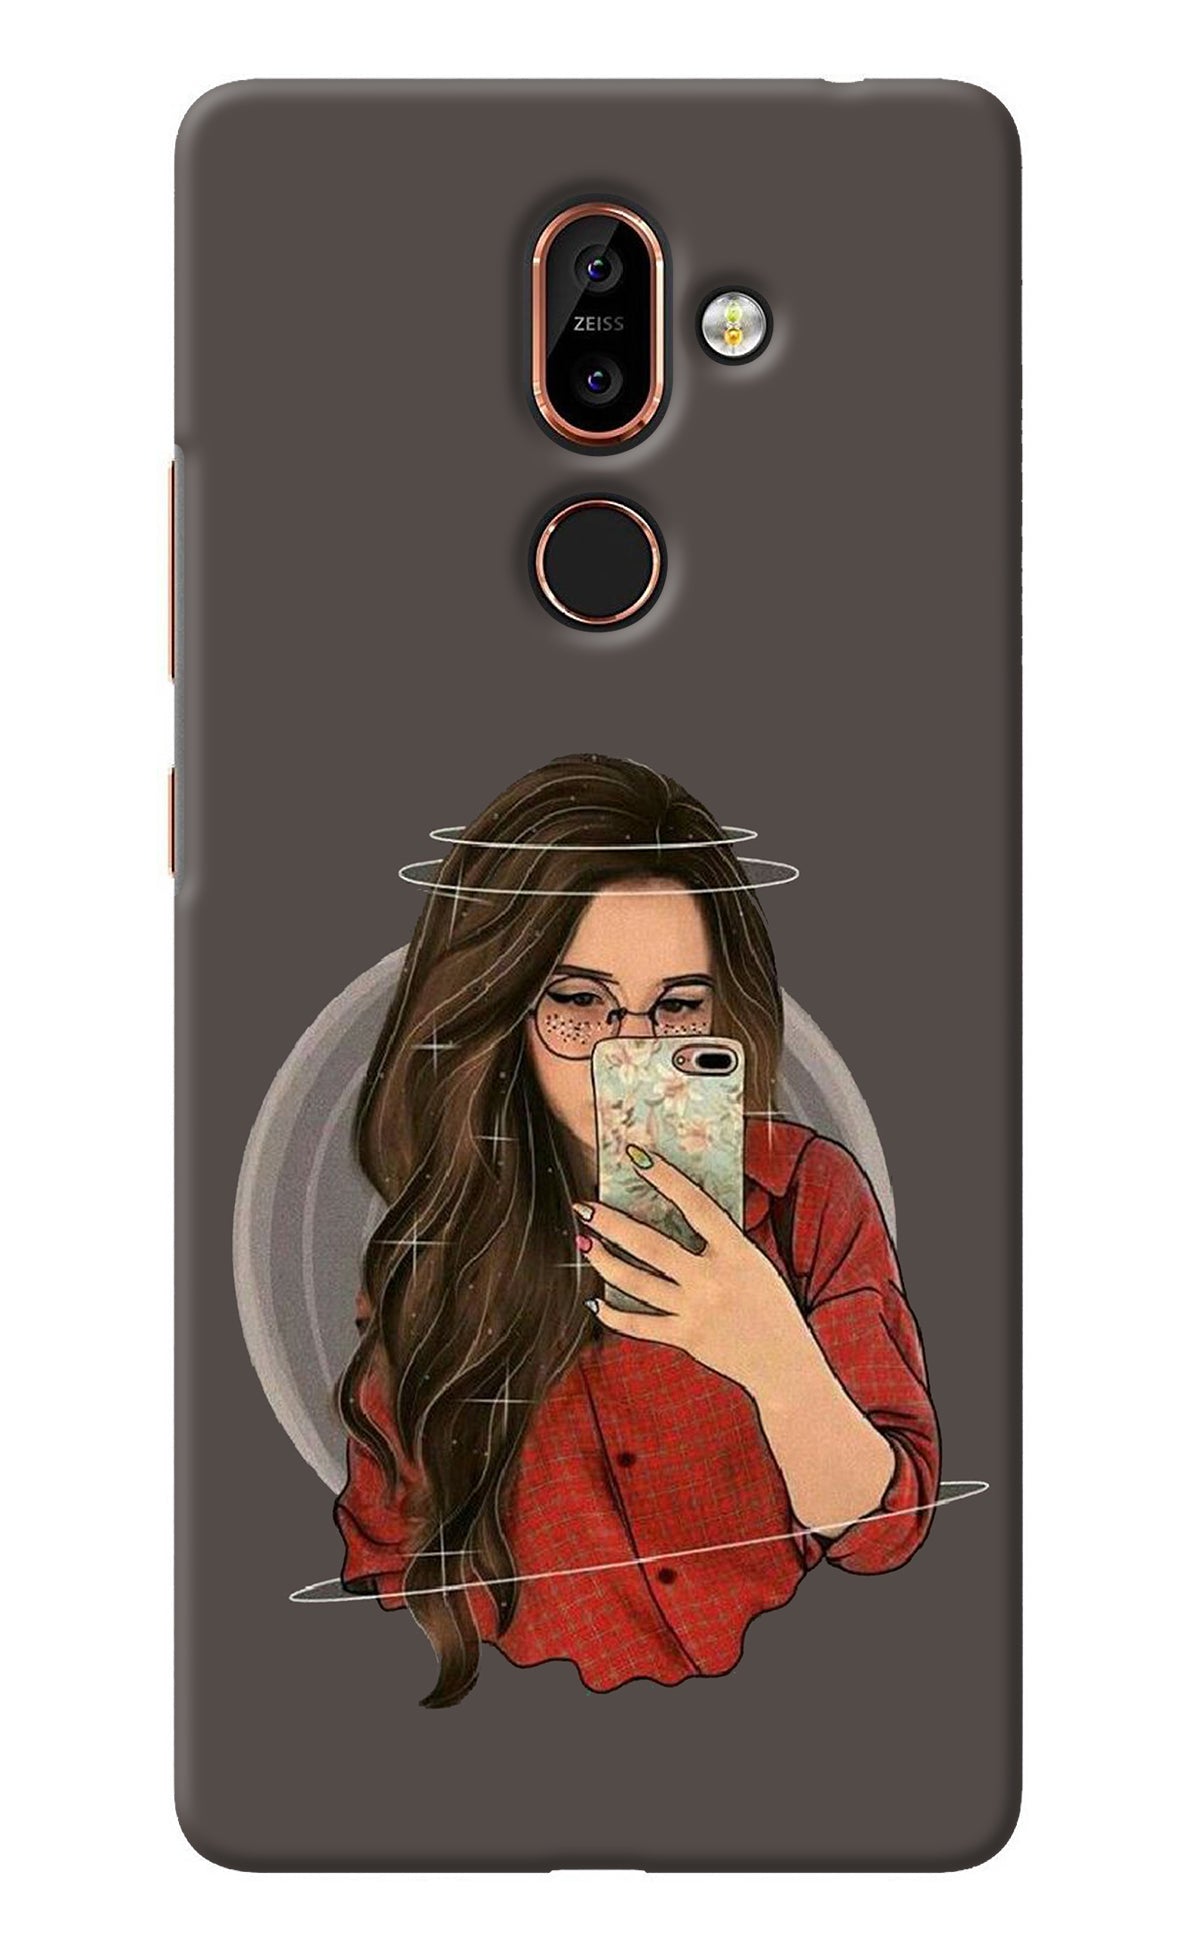 Selfie Queen Nokia 7 Plus Back Cover